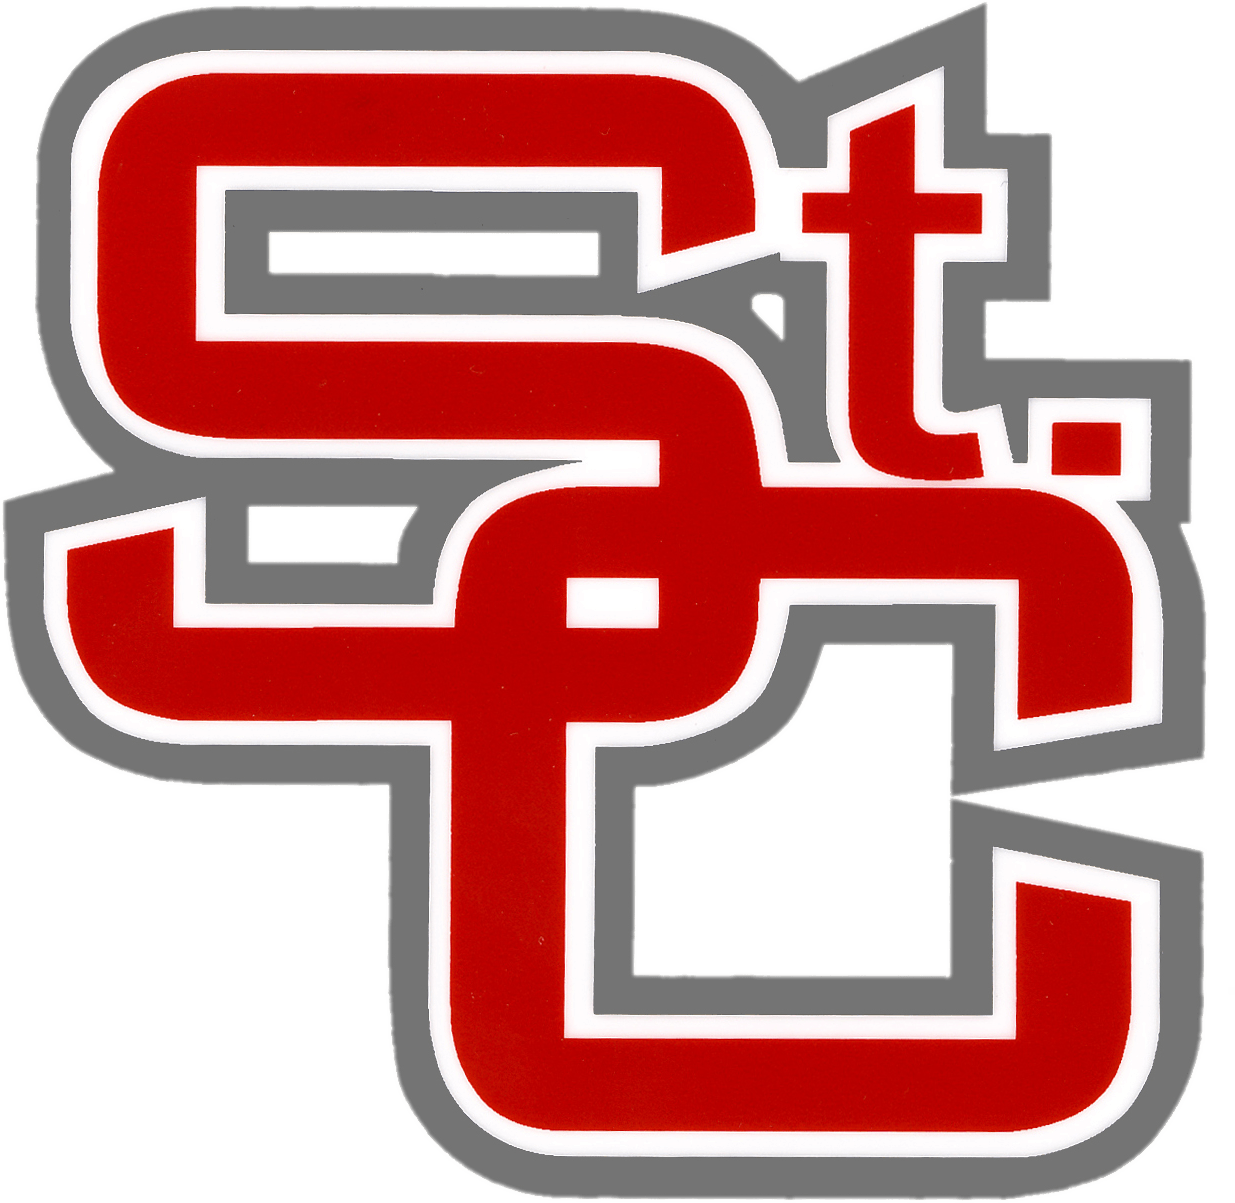 For School Red Devils Logo - St. Clairsville - Team Home St. Clairsville Red Devils Sports